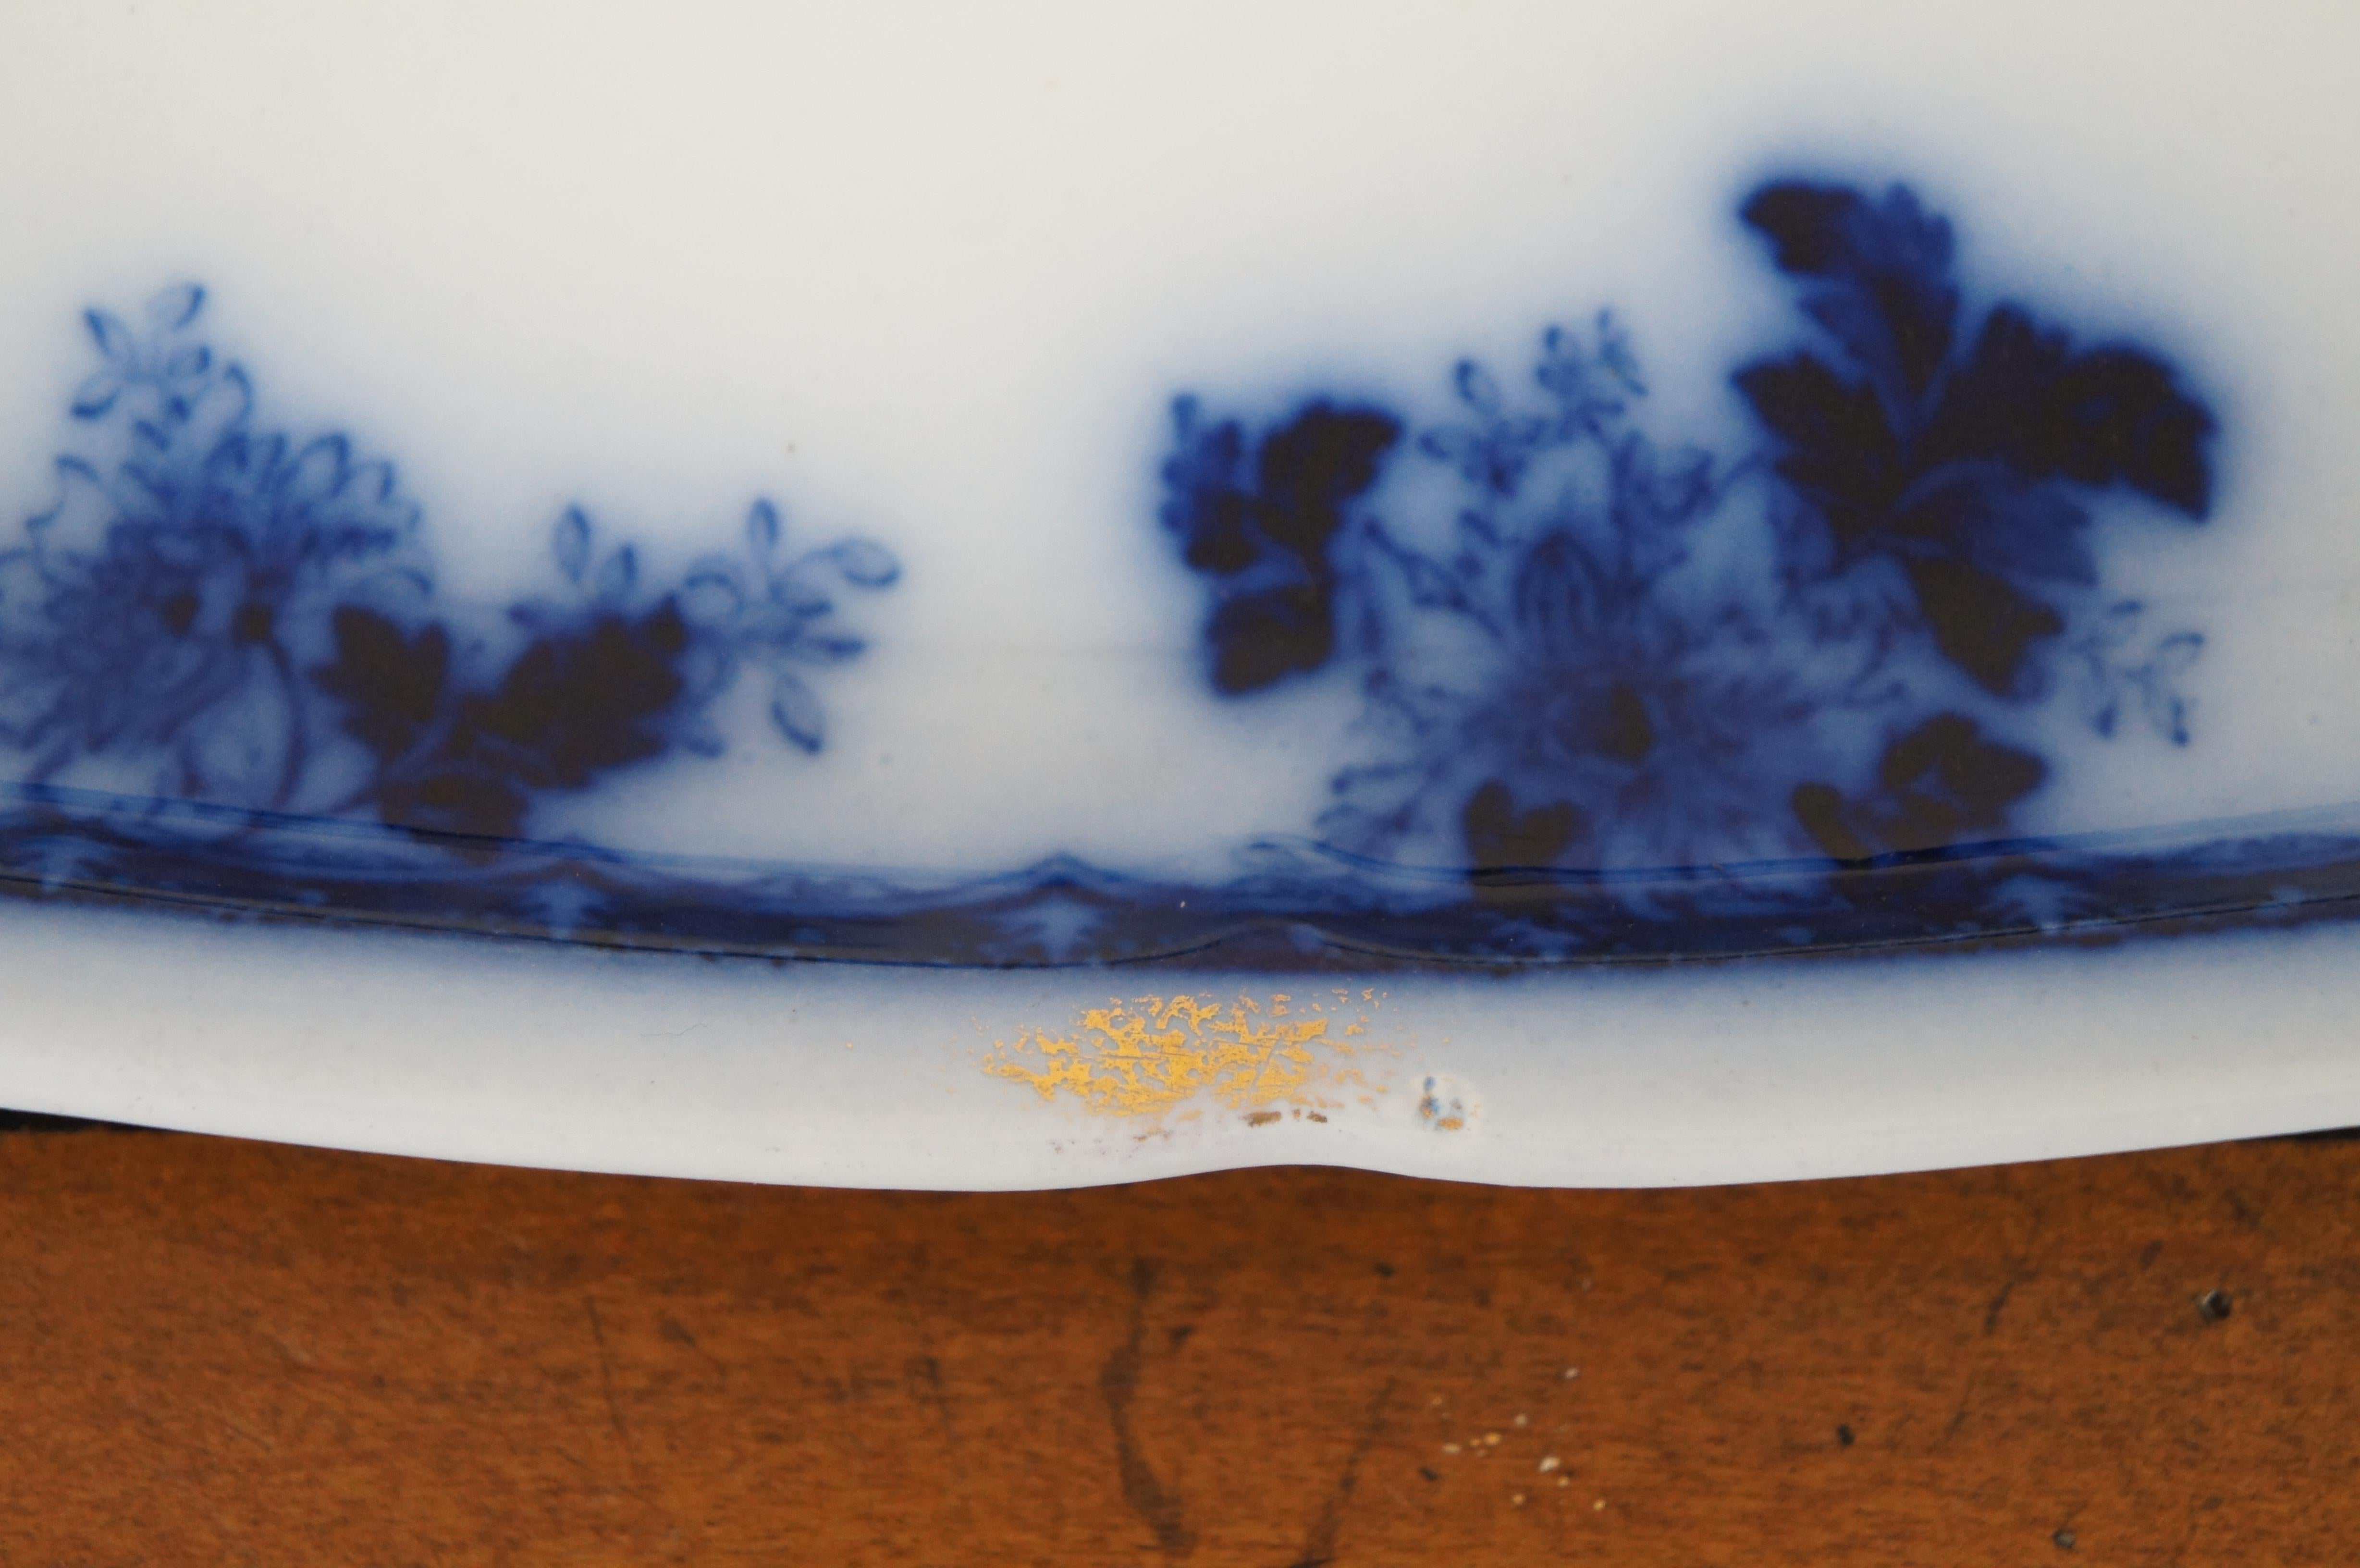 Antique Mercer Pottery Flow Blue Viterous China Luzerne Serving Platter Tray 13